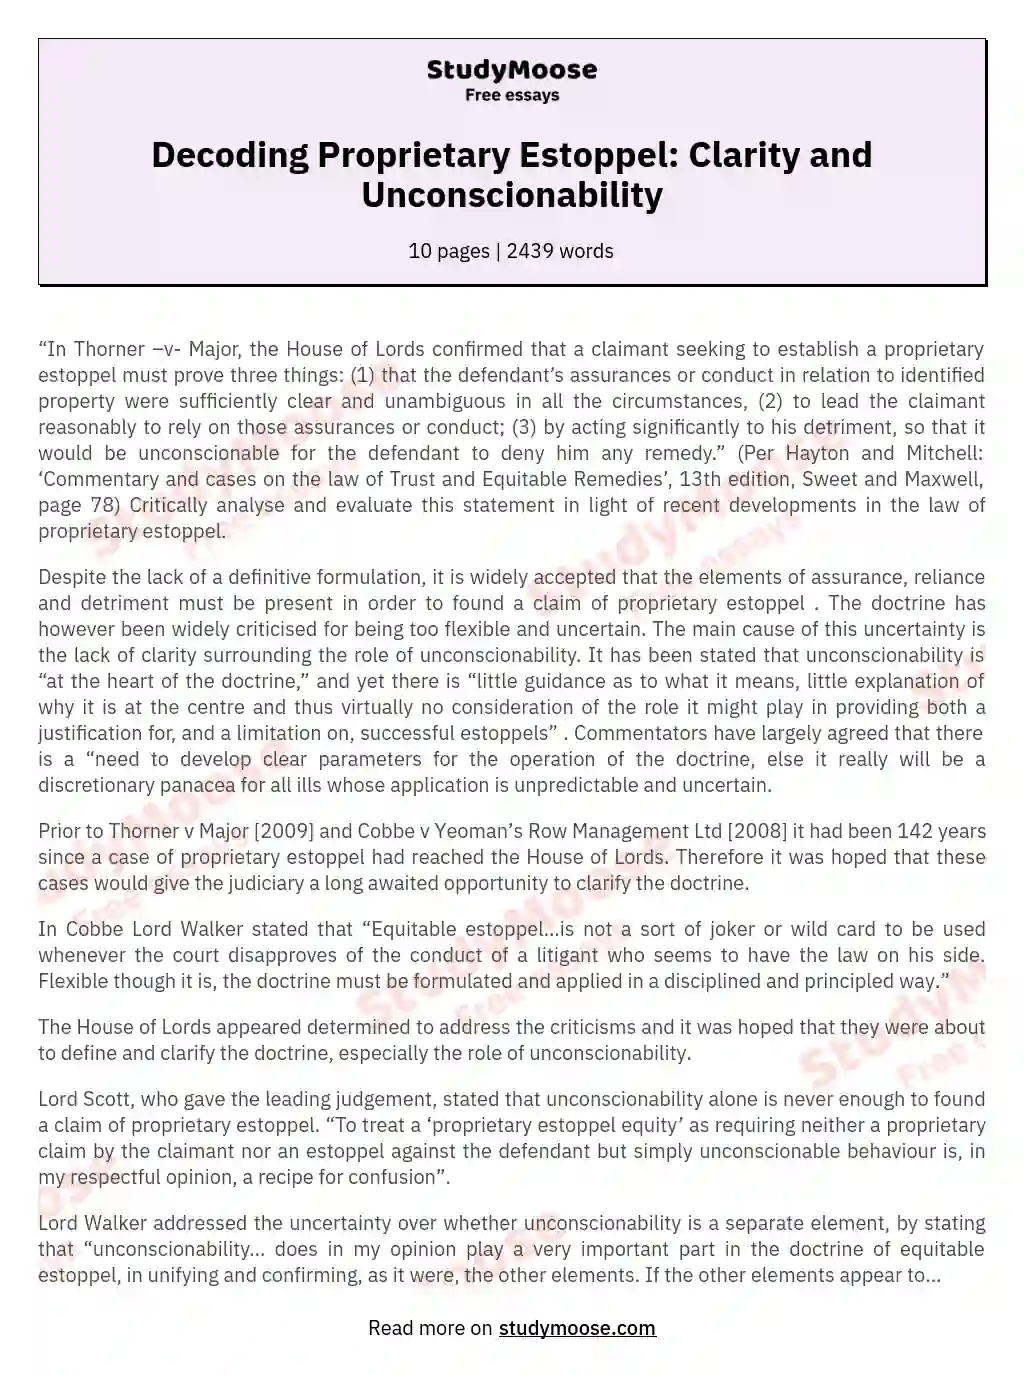 Decoding Proprietary Estoppel: Clarity and Unconscionability essay